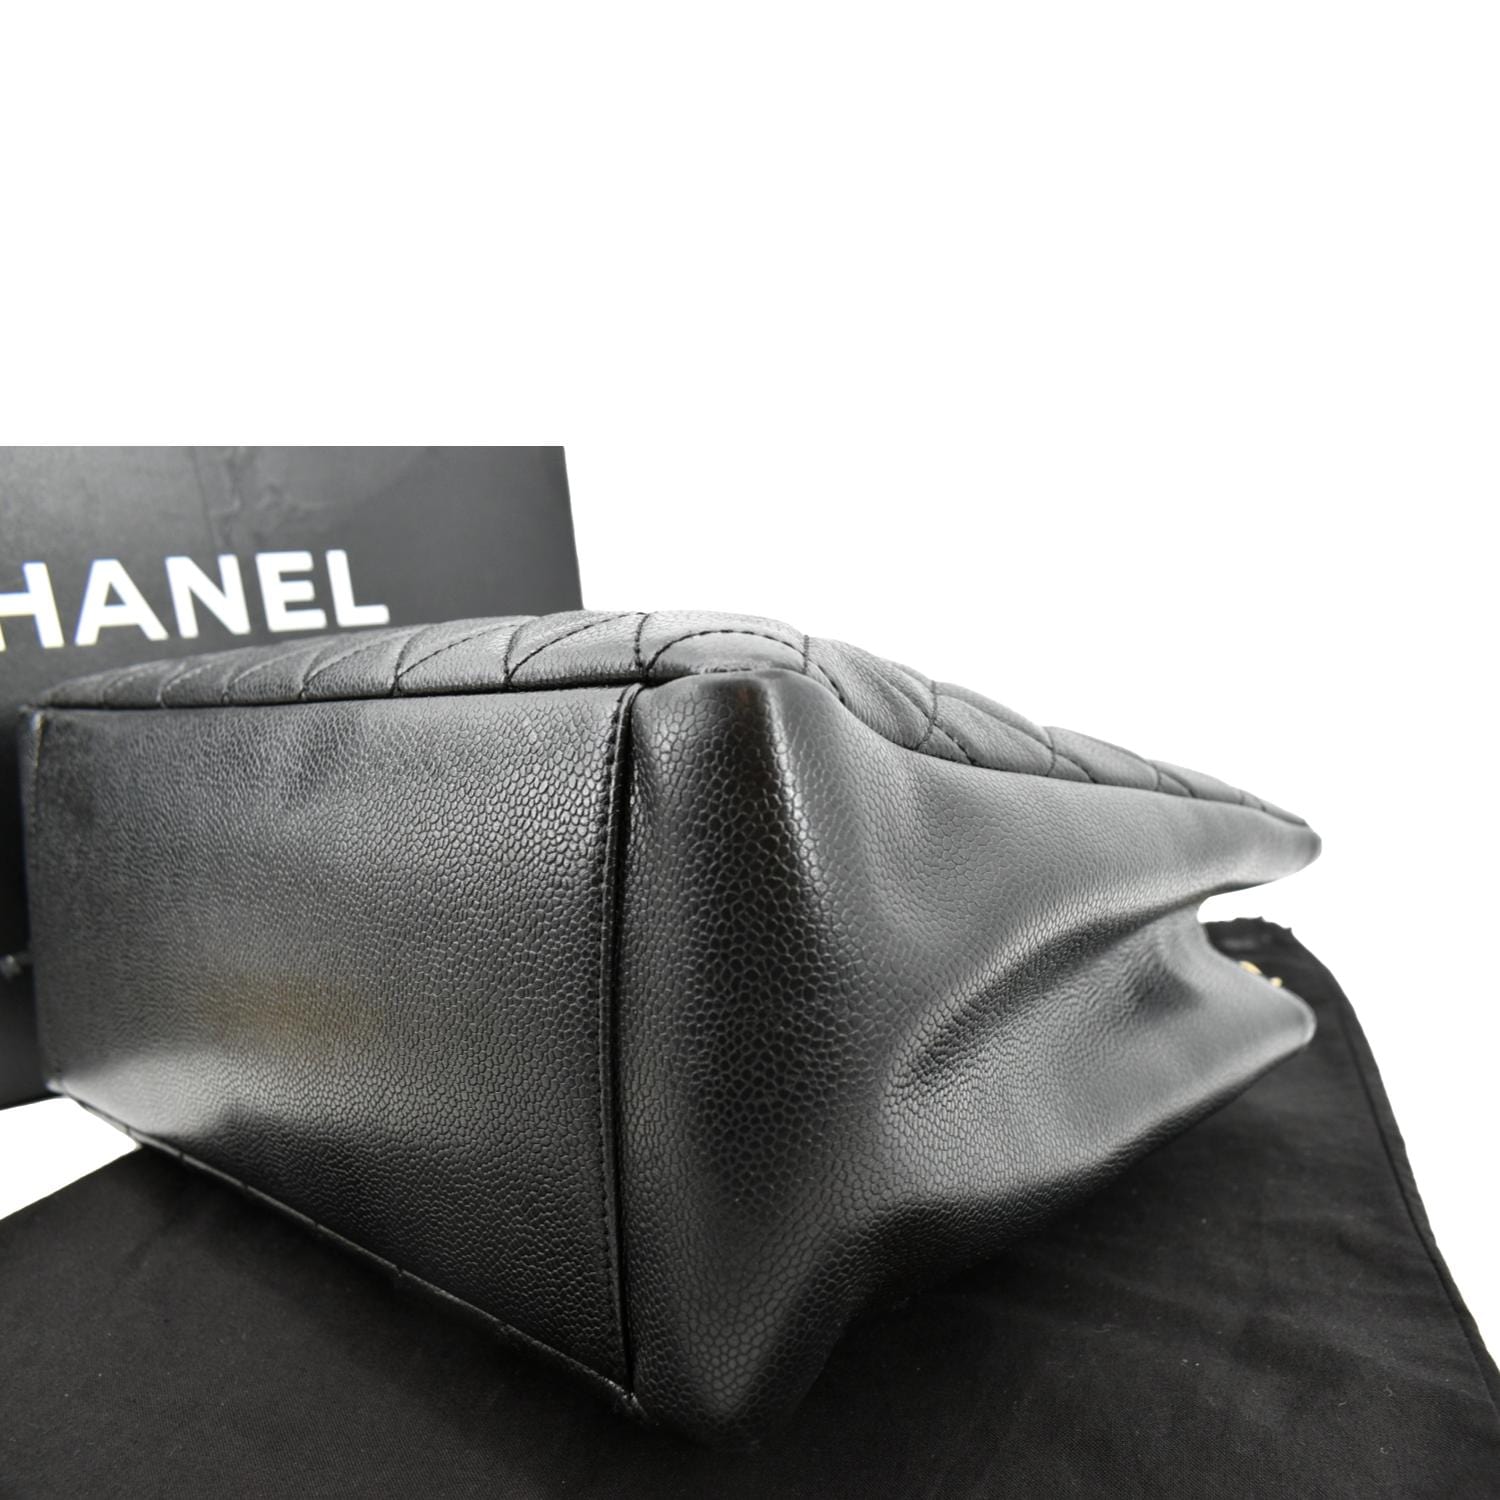 Chanel Bag Repair & Restoration - The Handbag Spa